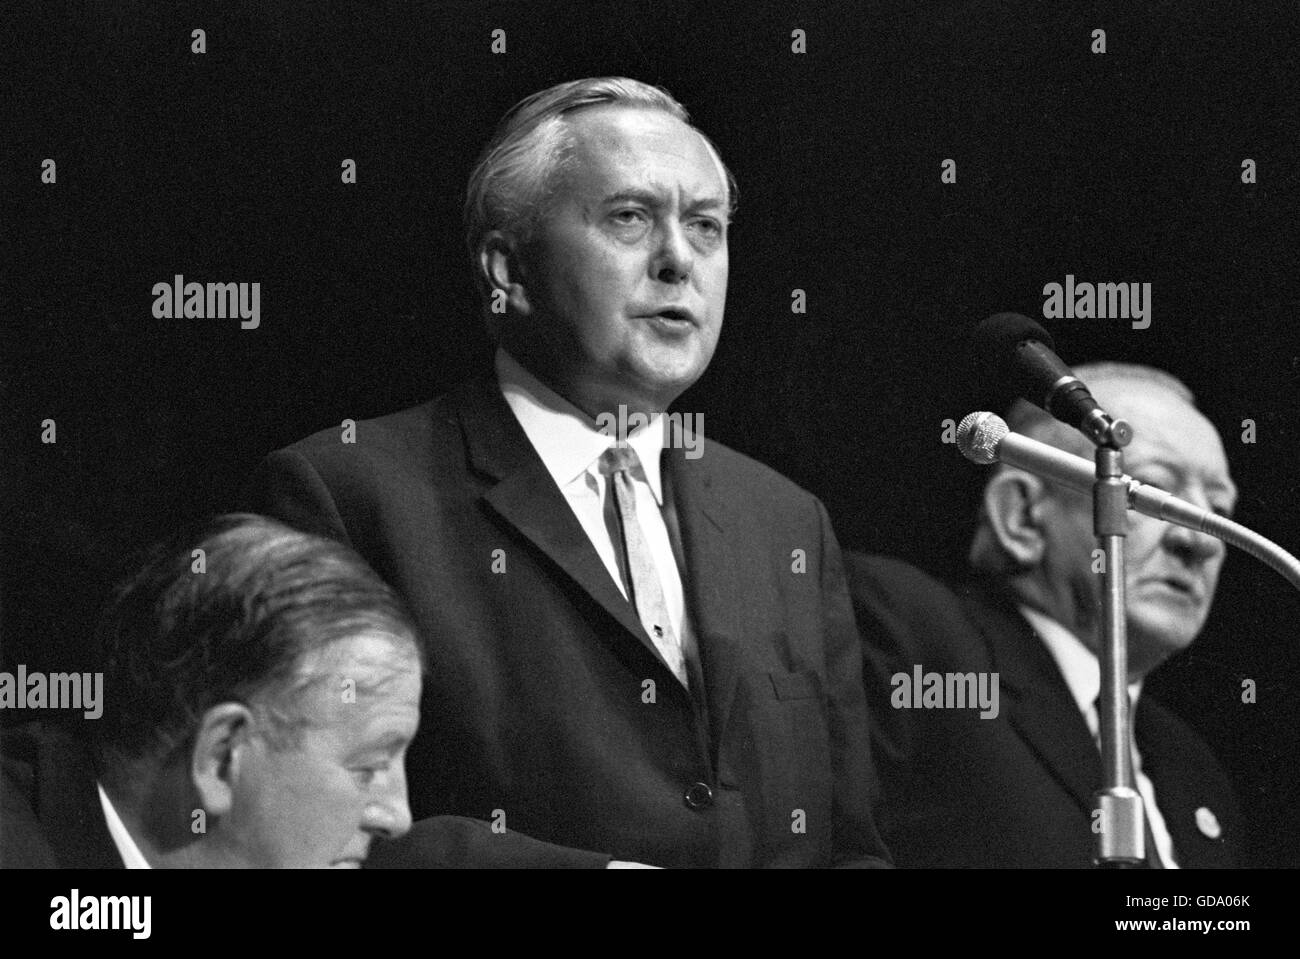 Prime Minister Harold Wilson Stock Photo